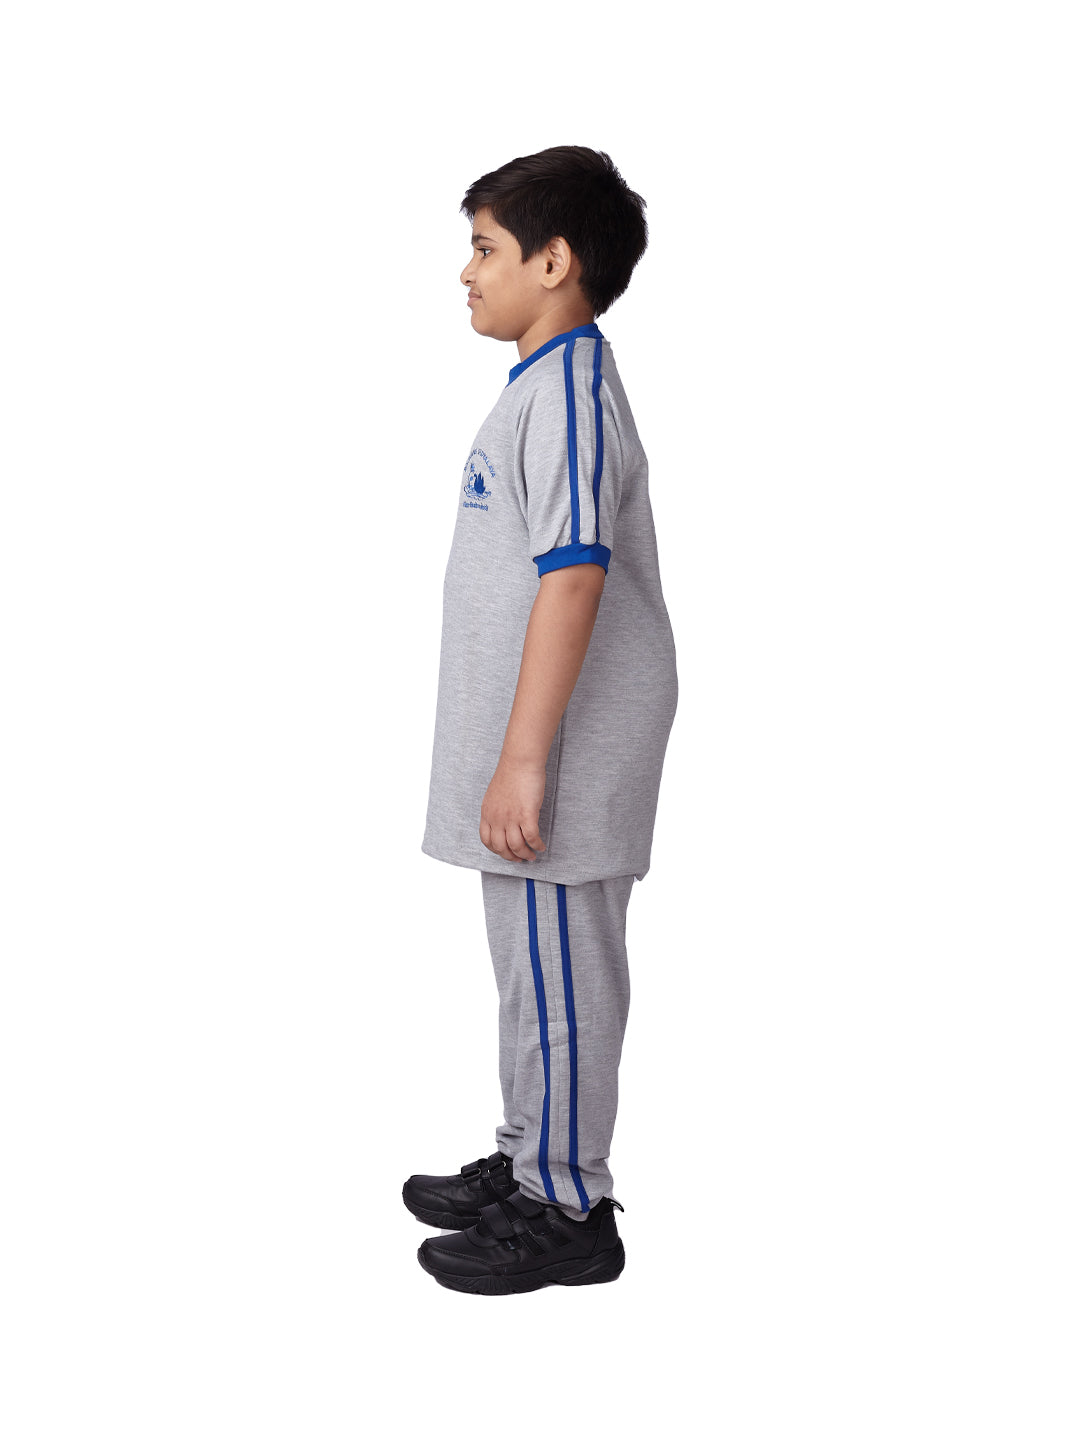 100sets custom kids track suit boys| Alibaba.com